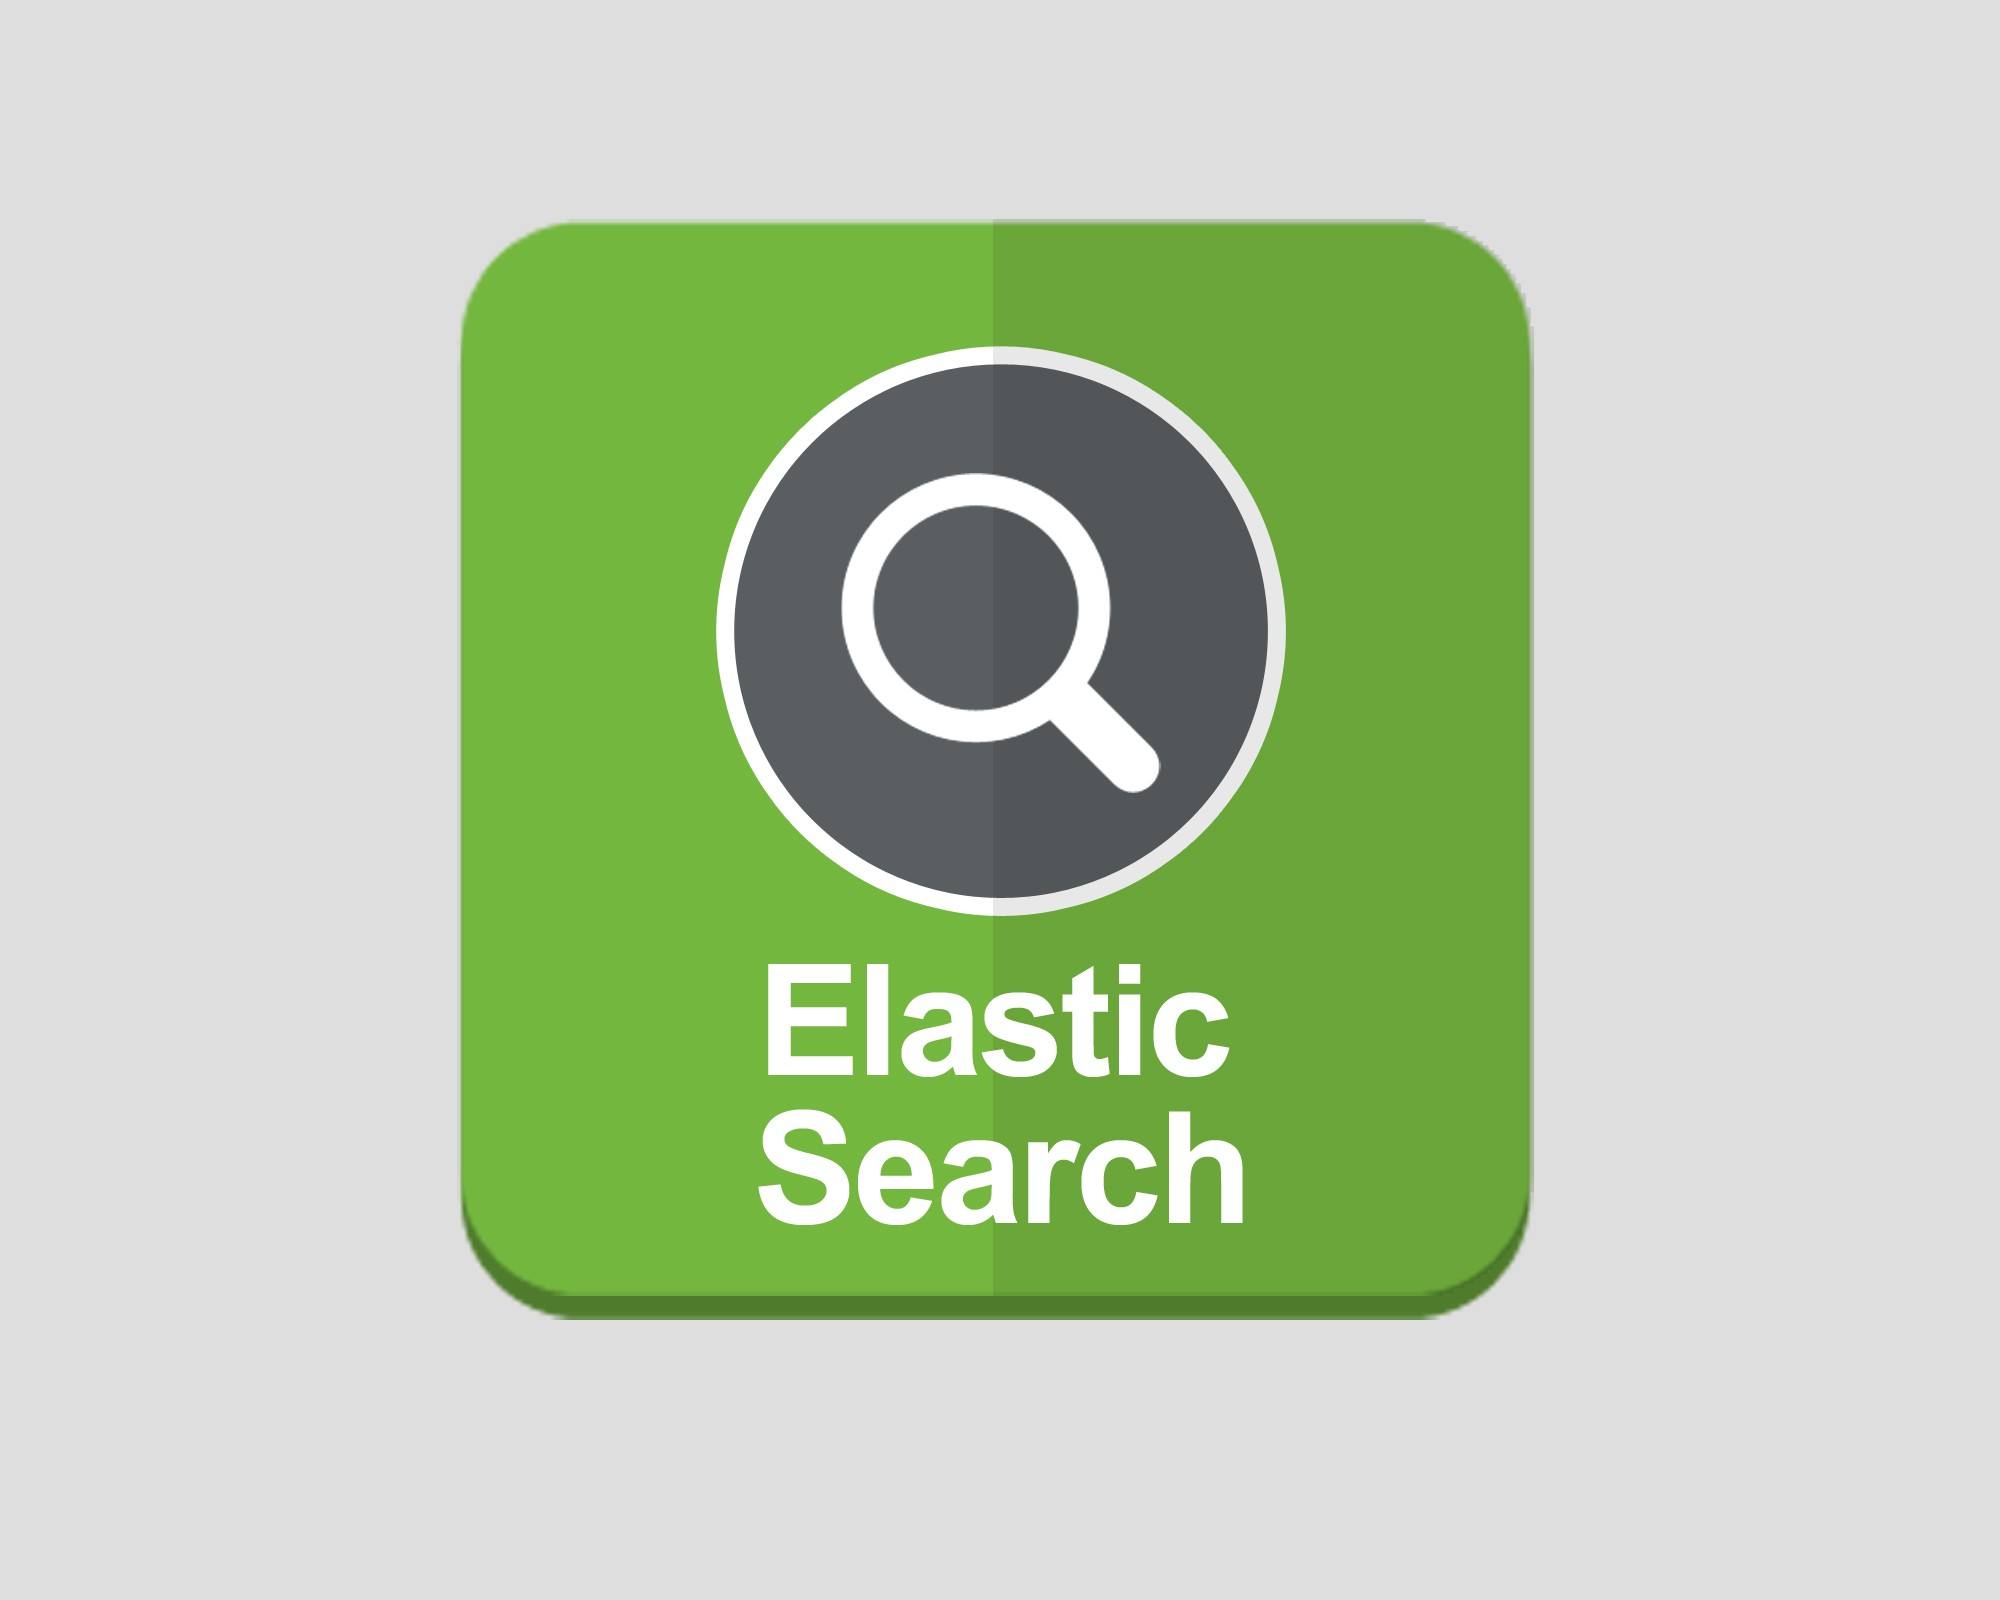 elasticsearch logo图片